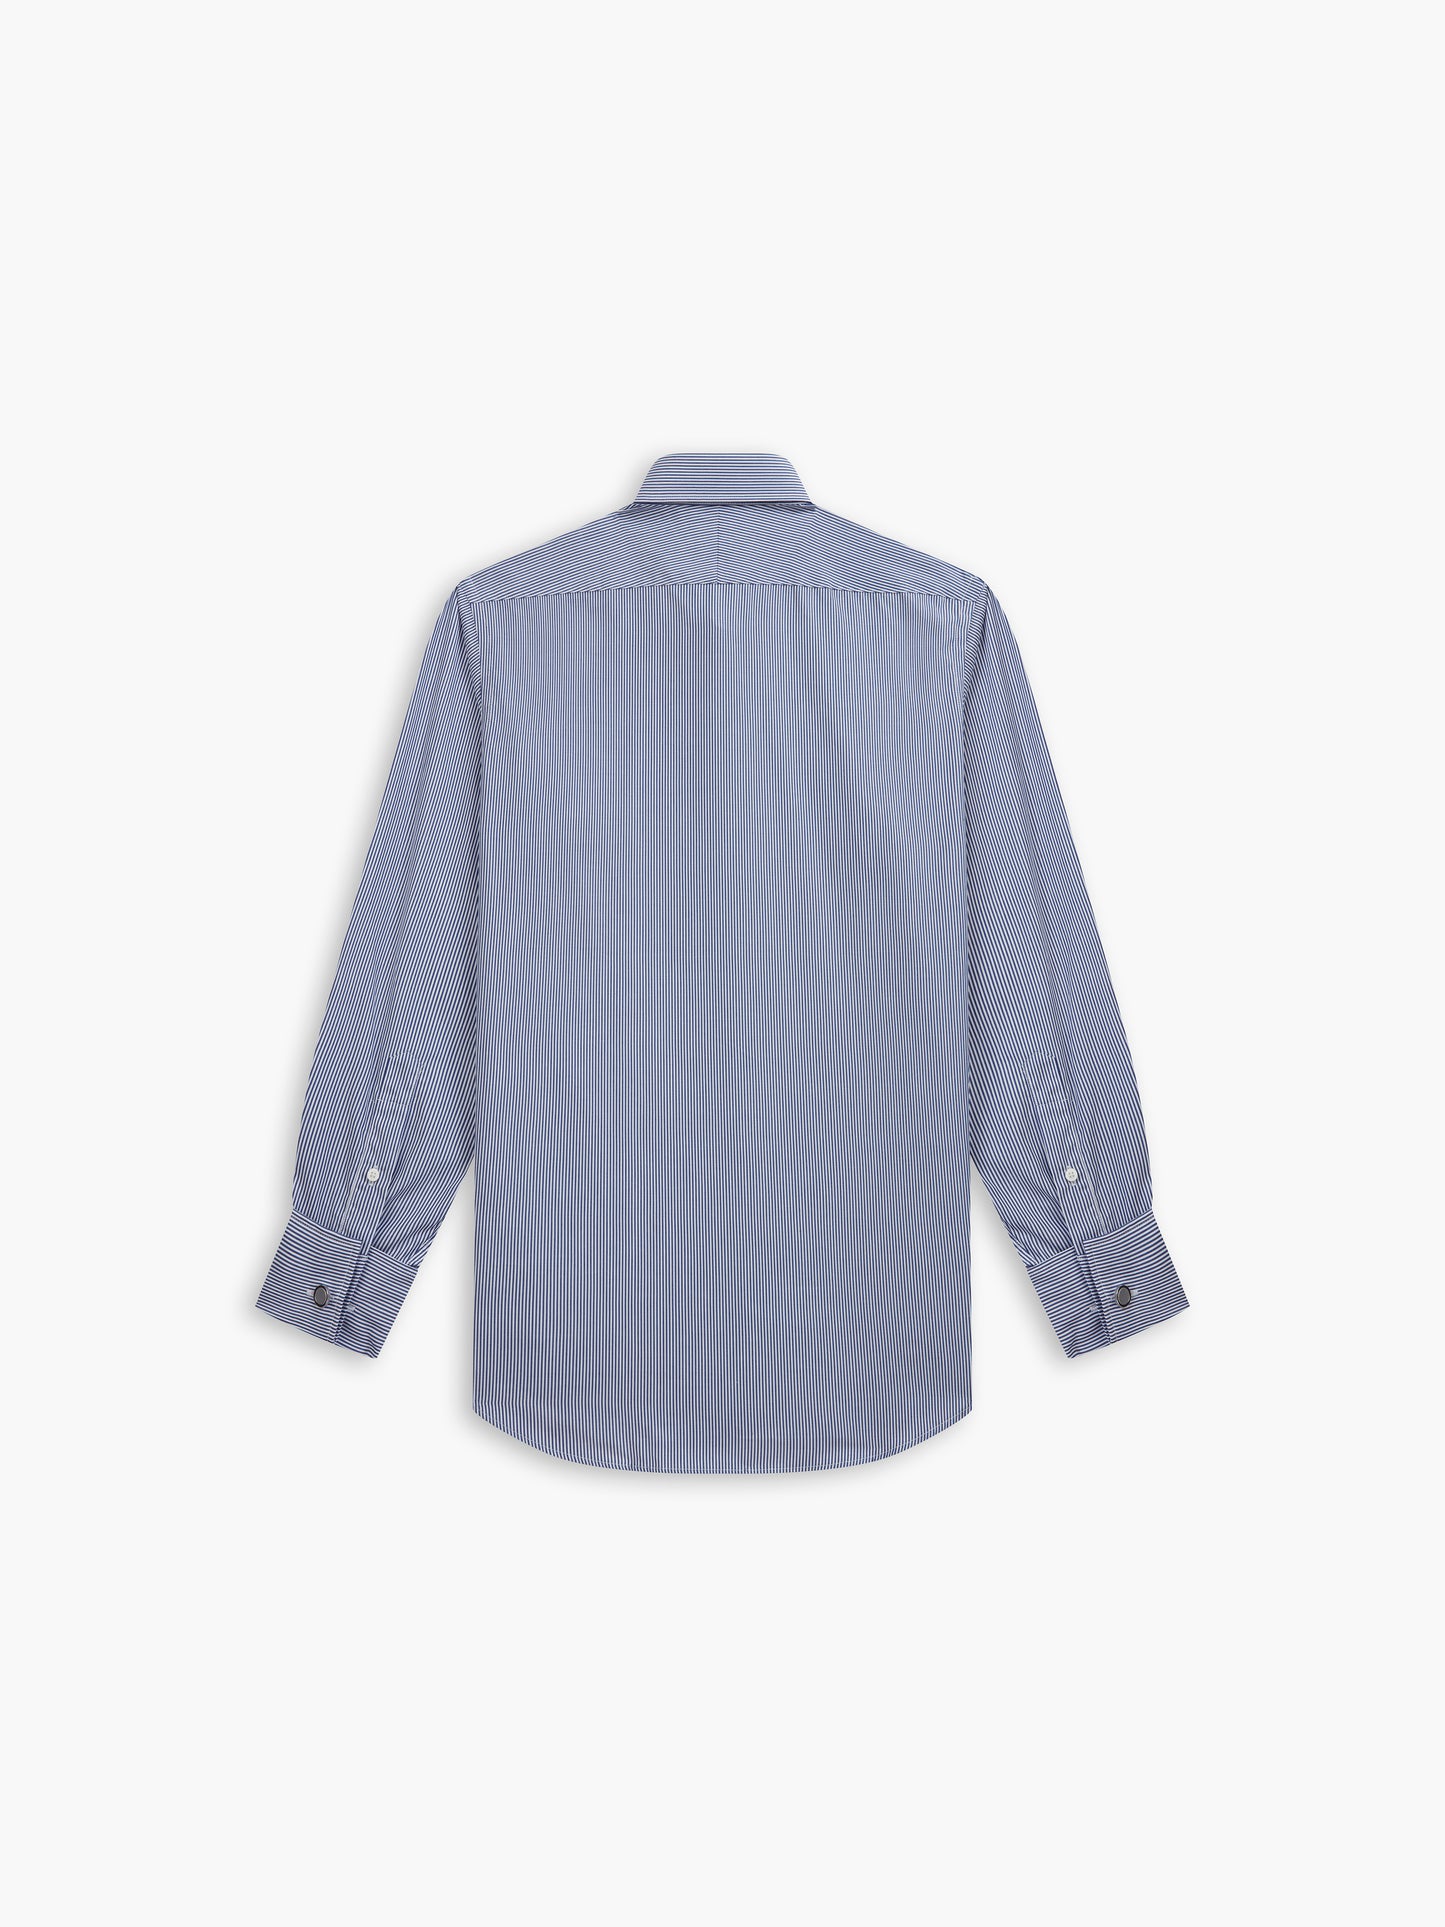 Navy Blue Mini Bengal Stripe Plain Weave Slim Fit Double Cuff Classic Collar Shirt